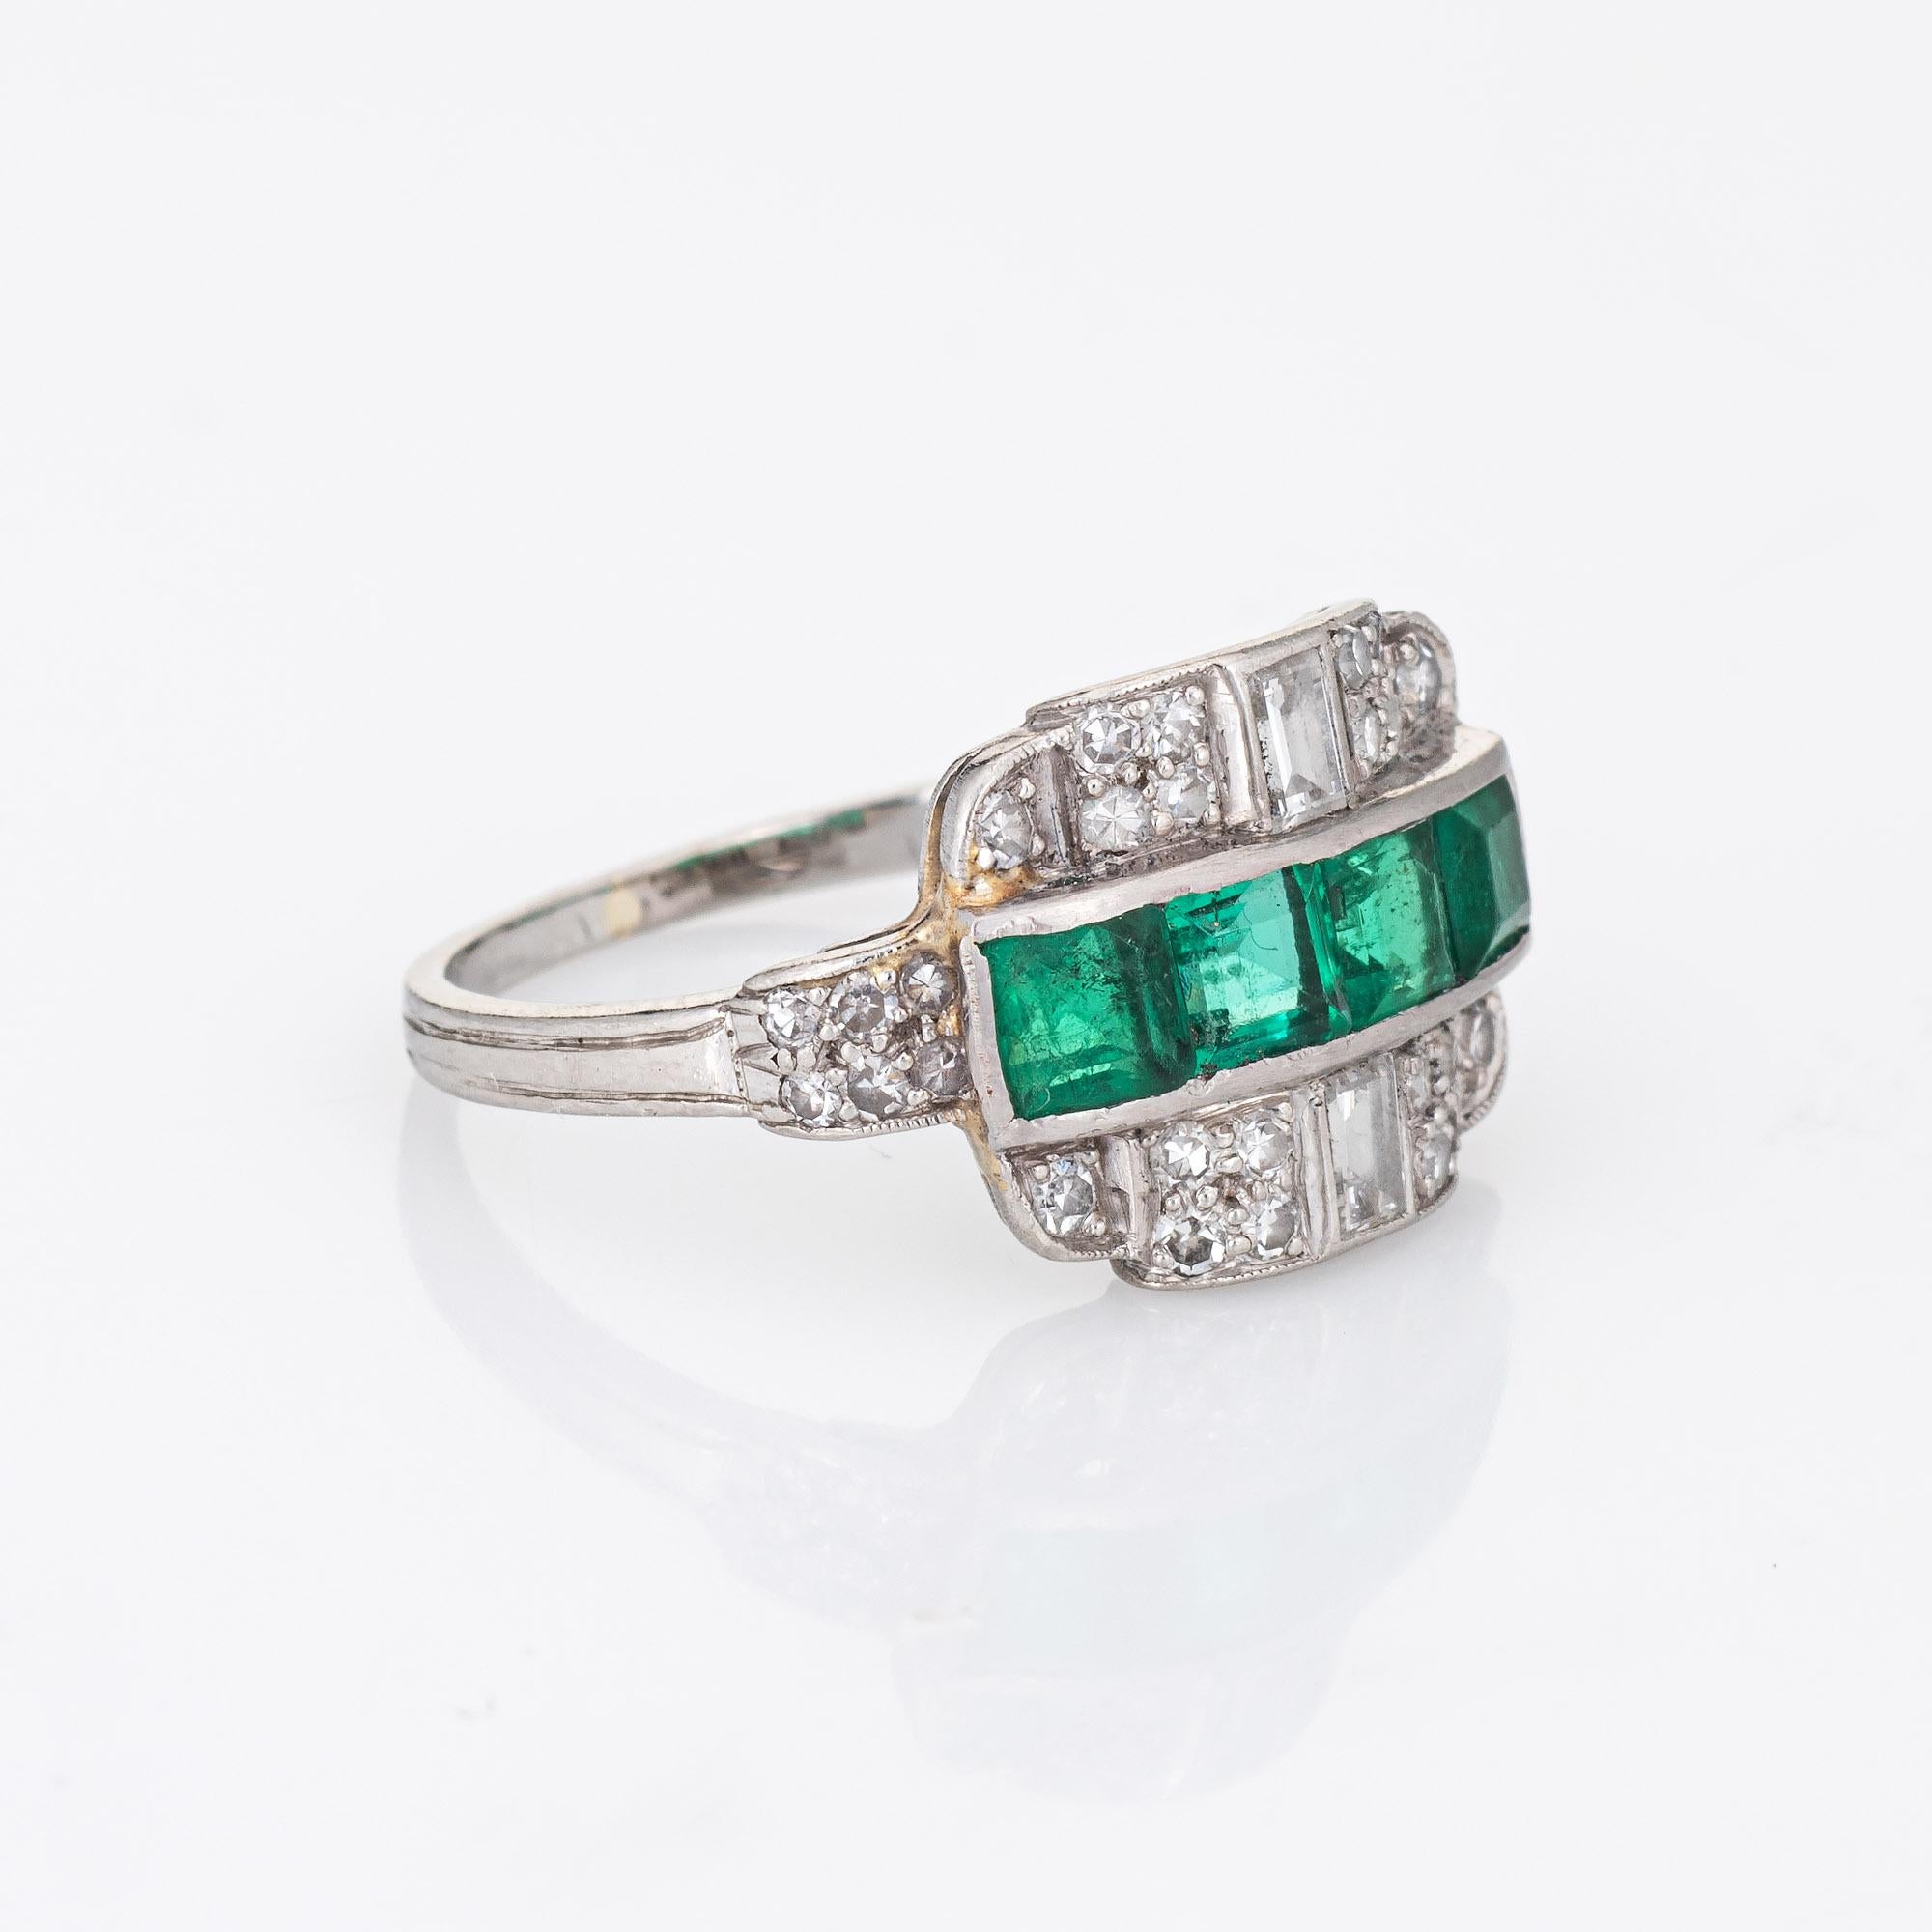 Emerald Cut Vintage Art Deco Emerald Diamond Ring Platinum Estate Fine Jewelry